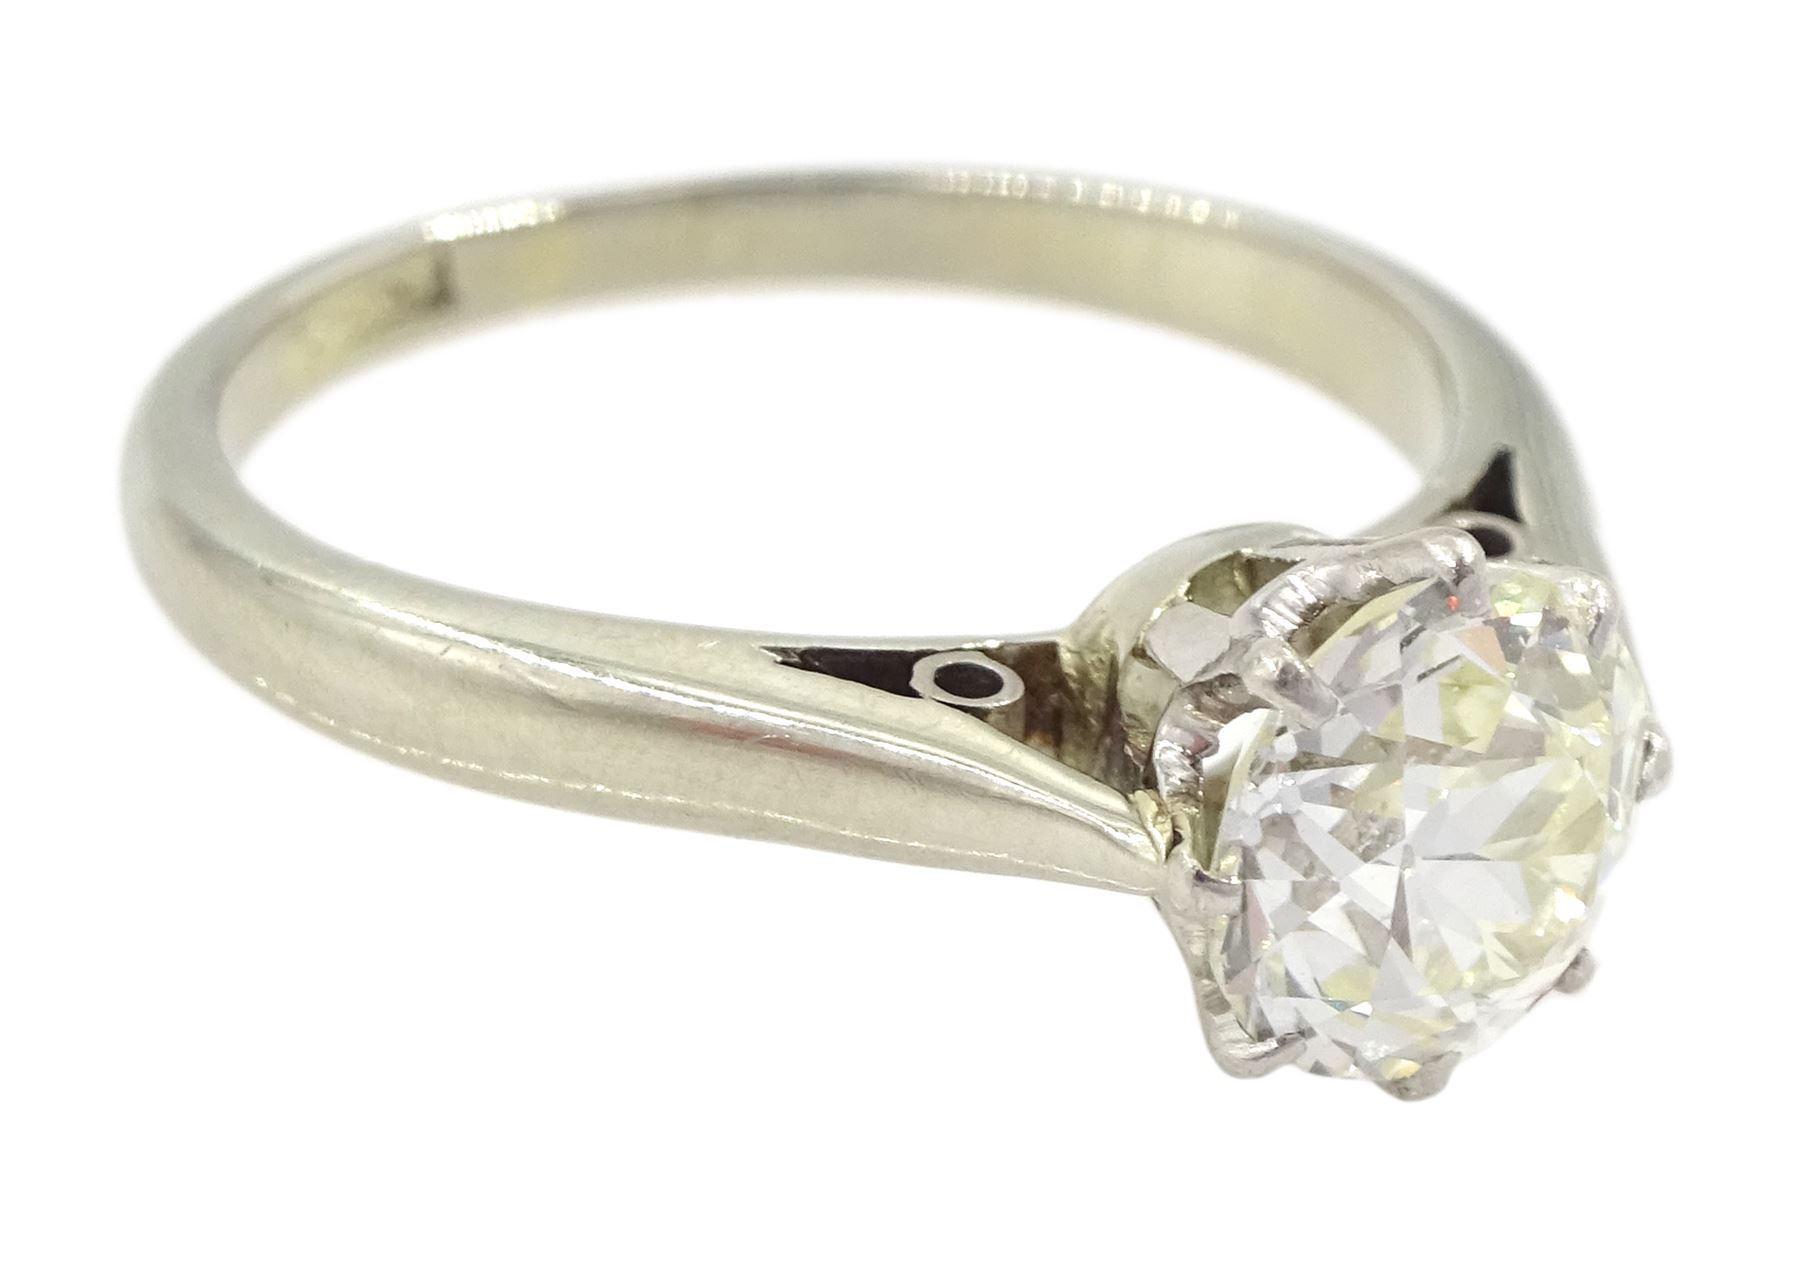 White gold single stone old cut diamond ring - Image 3 of 4